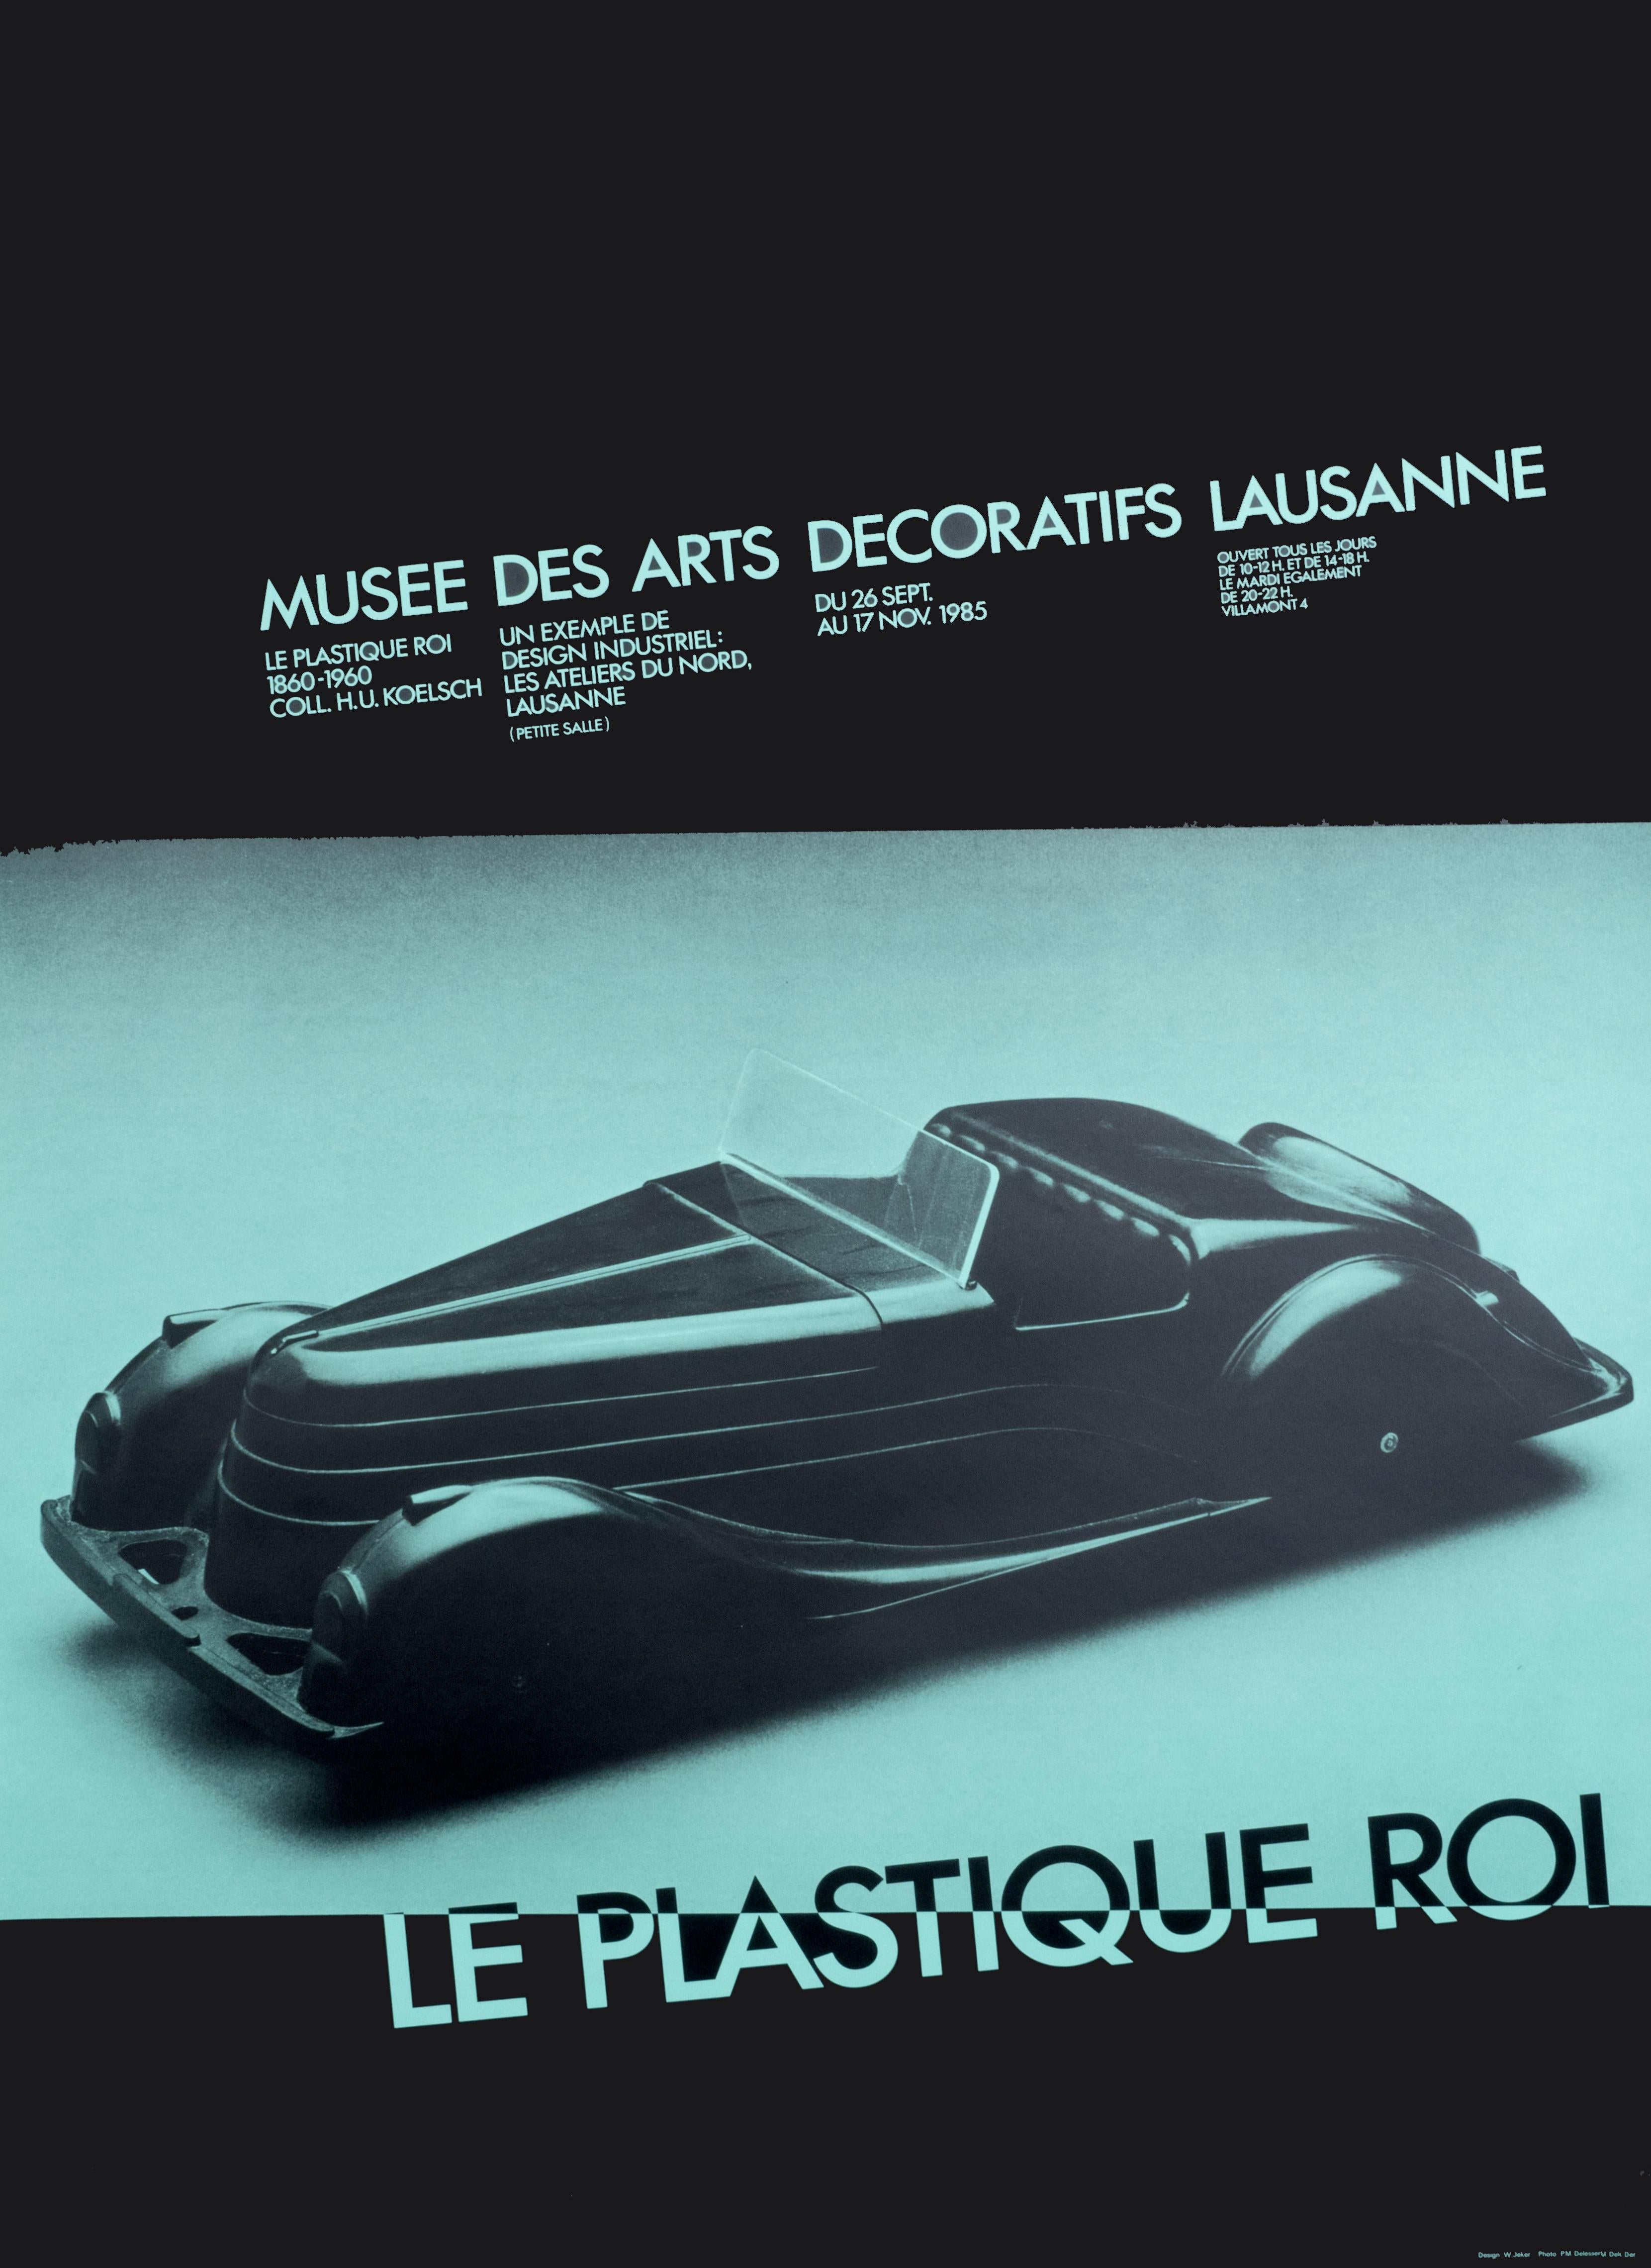 Werner B. Jeker Figurative Print - "Le Plastique Roi" Original Swiss Design Museum Poster